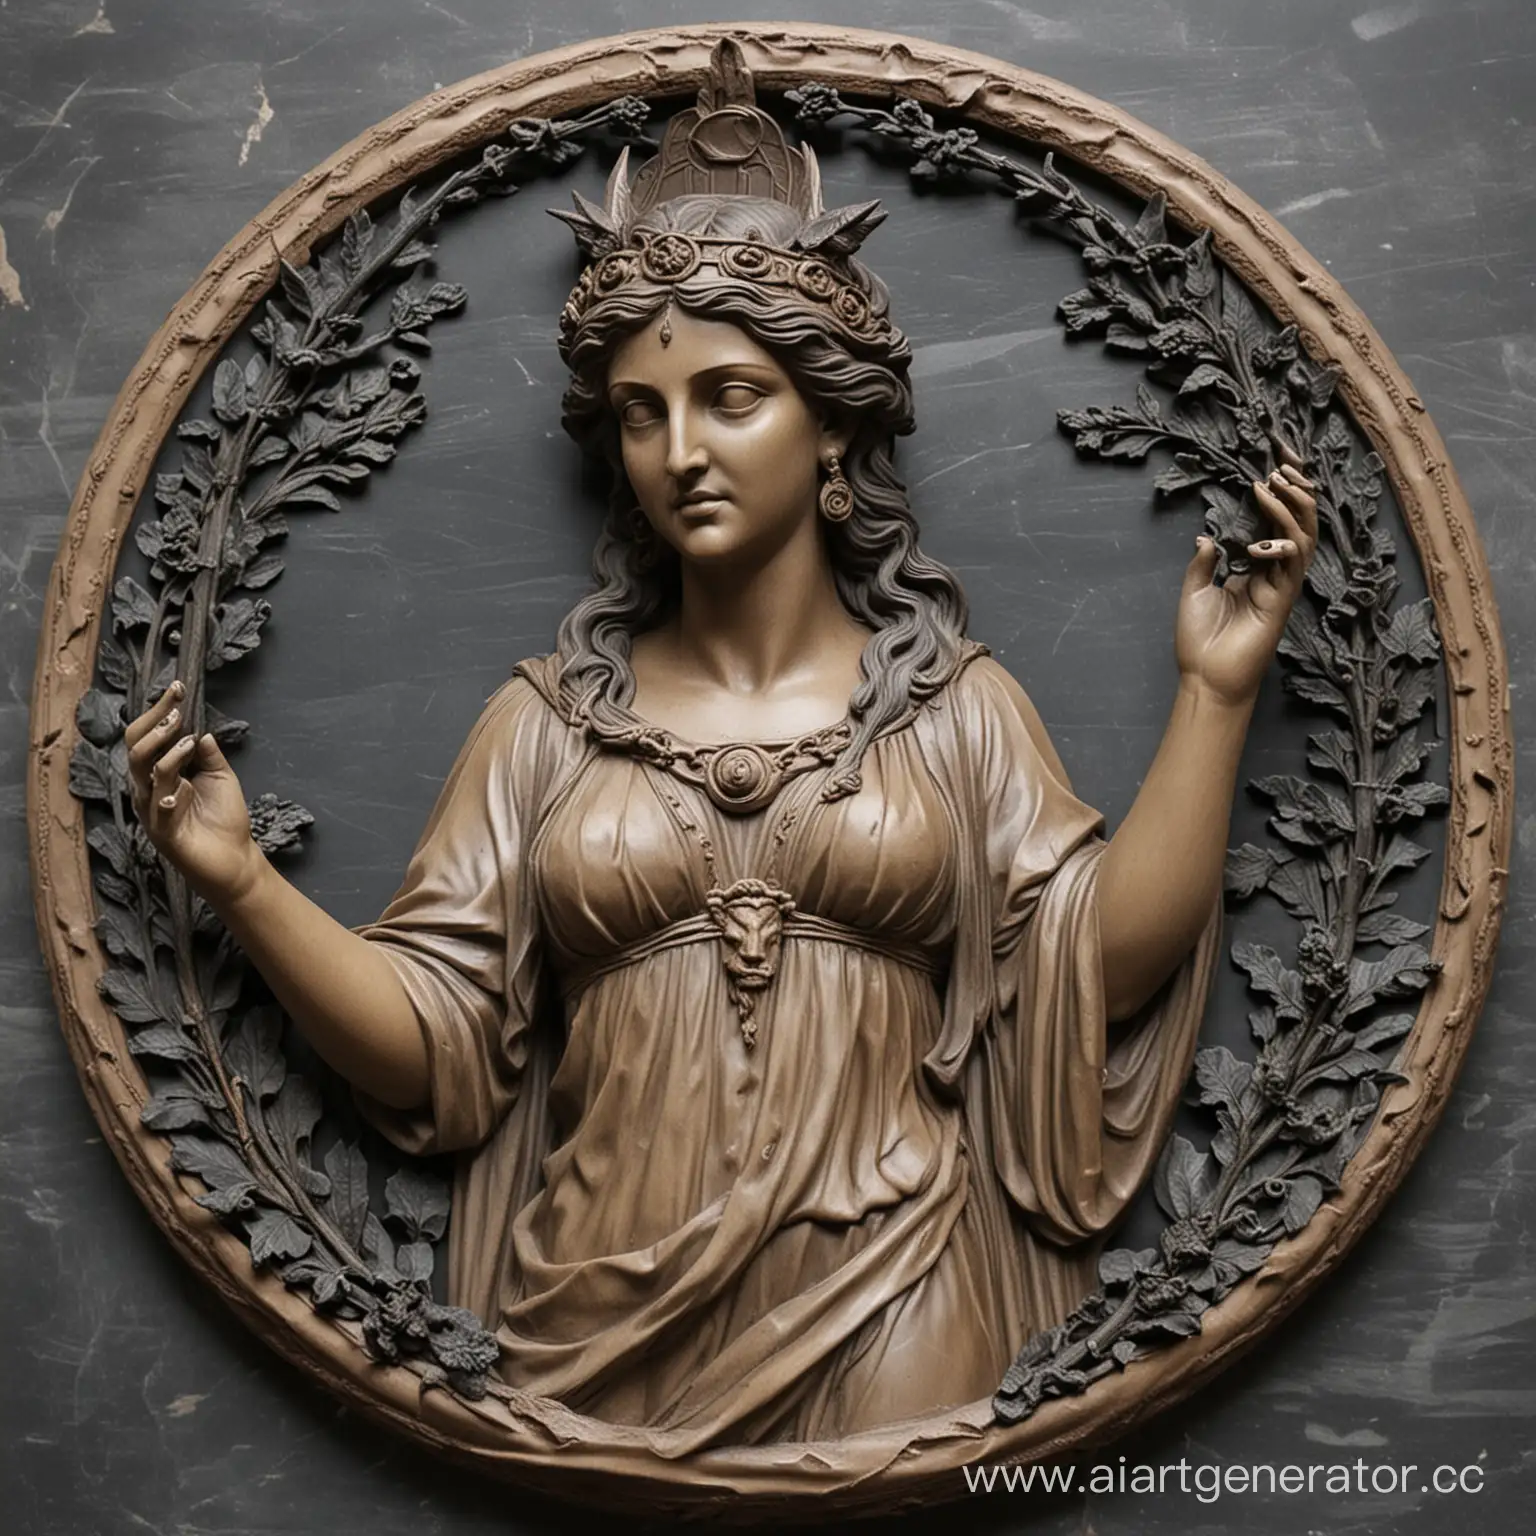 Ancient-Greek-Goddess-Hecate-Seeking-Redemption-Through-Poisonous-Transformation